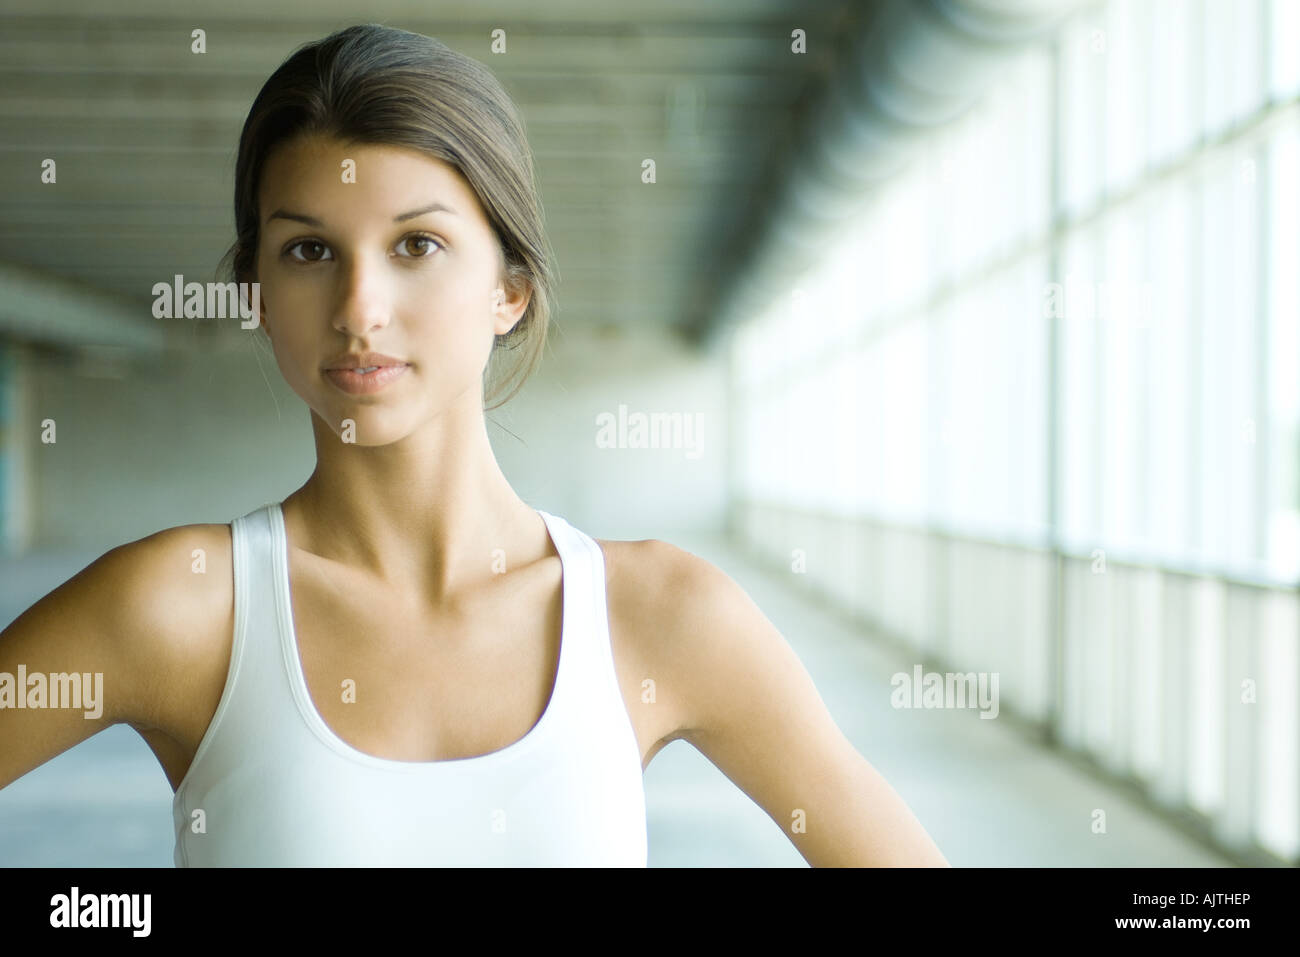 Teenage girl looking at camera, wearing tank top, portrait Stock Photo